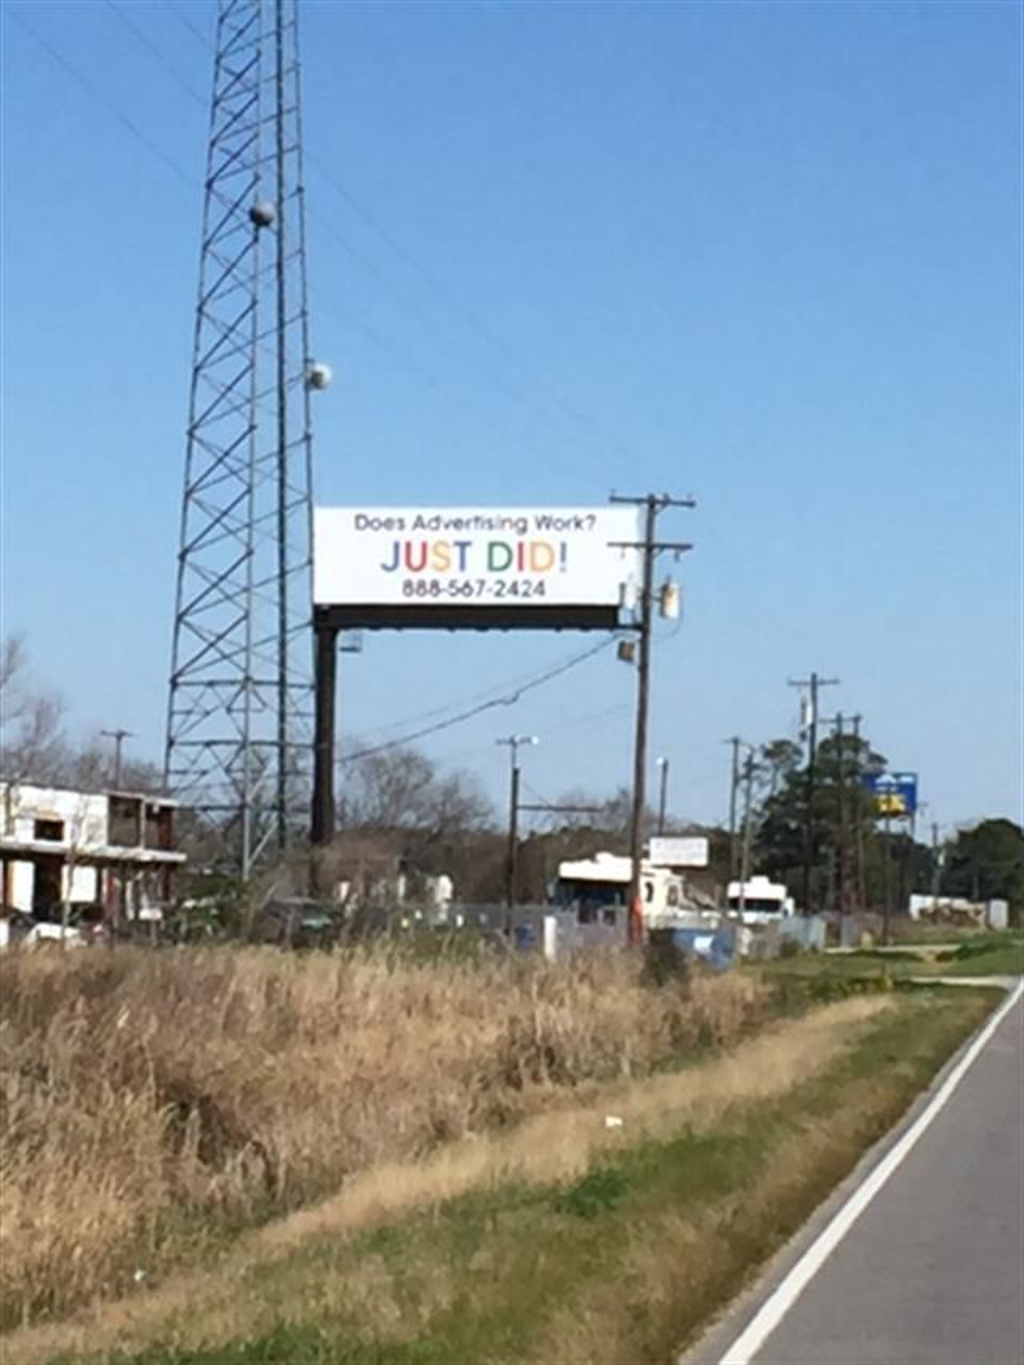 Photo of a billboard in Eunice